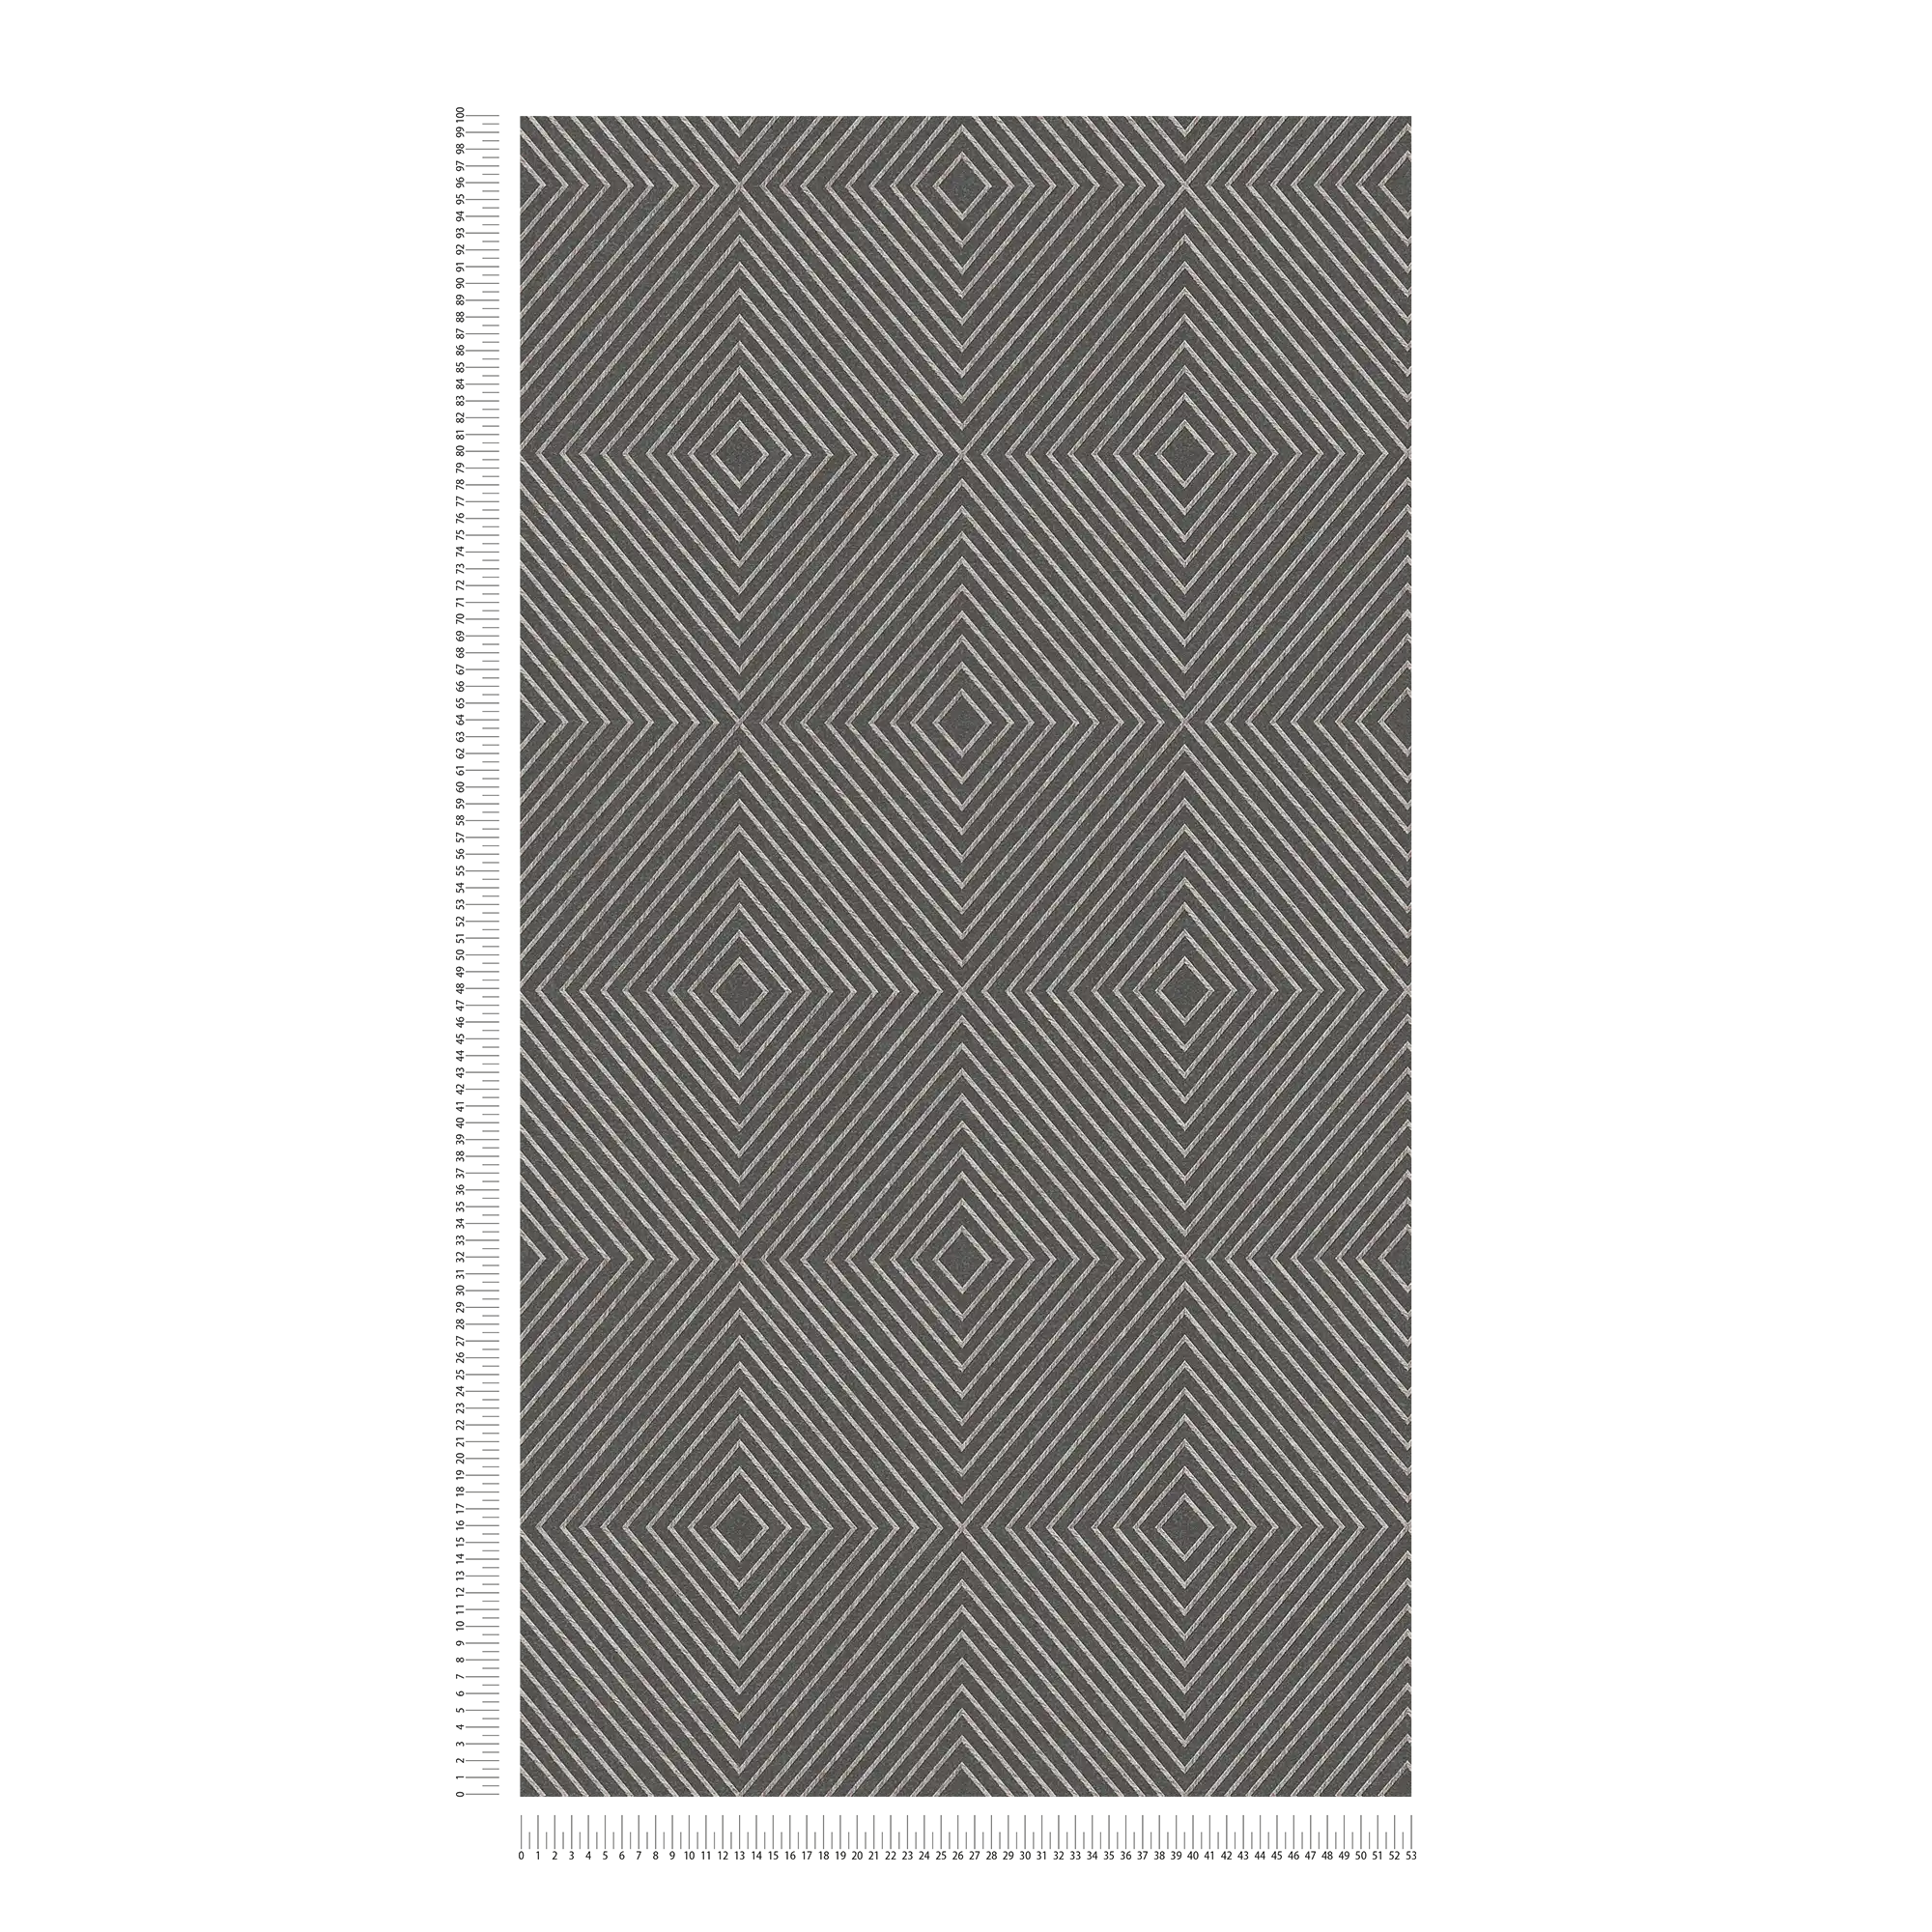             Tapete Grafik-Design, Scandinavian Style – Grau, Silber
        